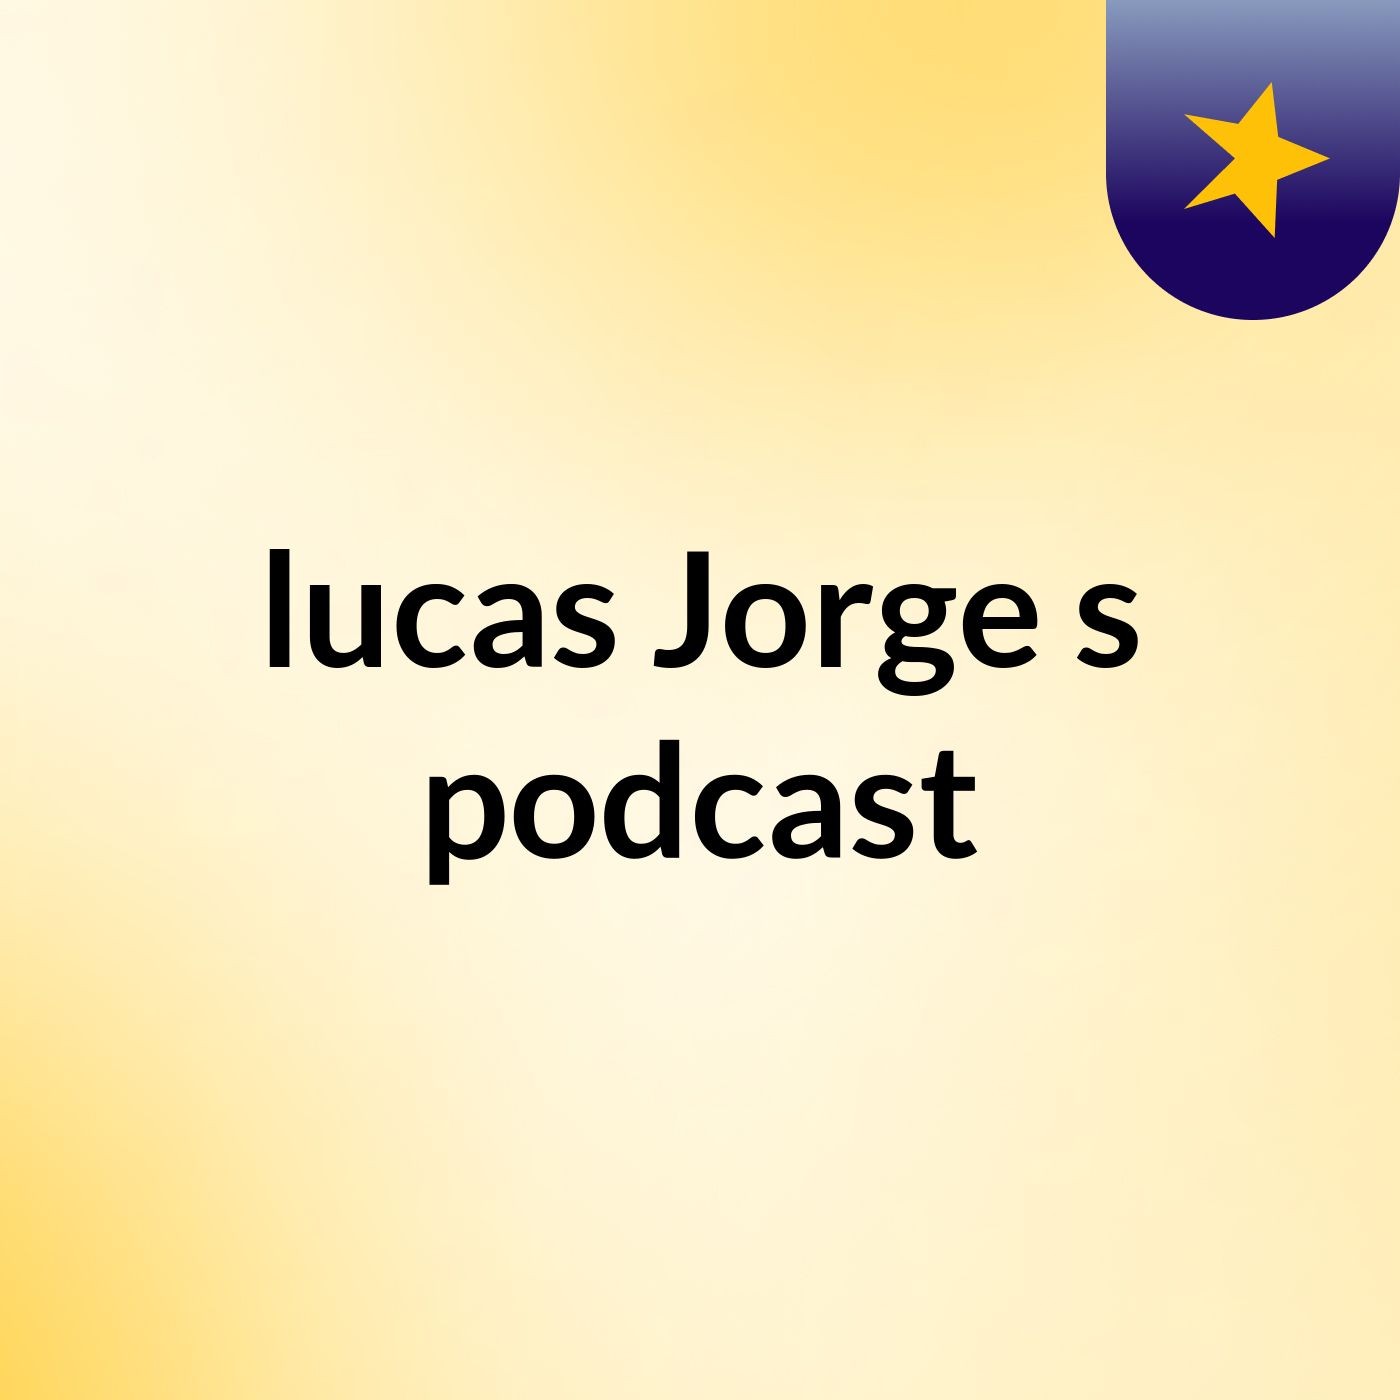 lucas Jorge's podcast